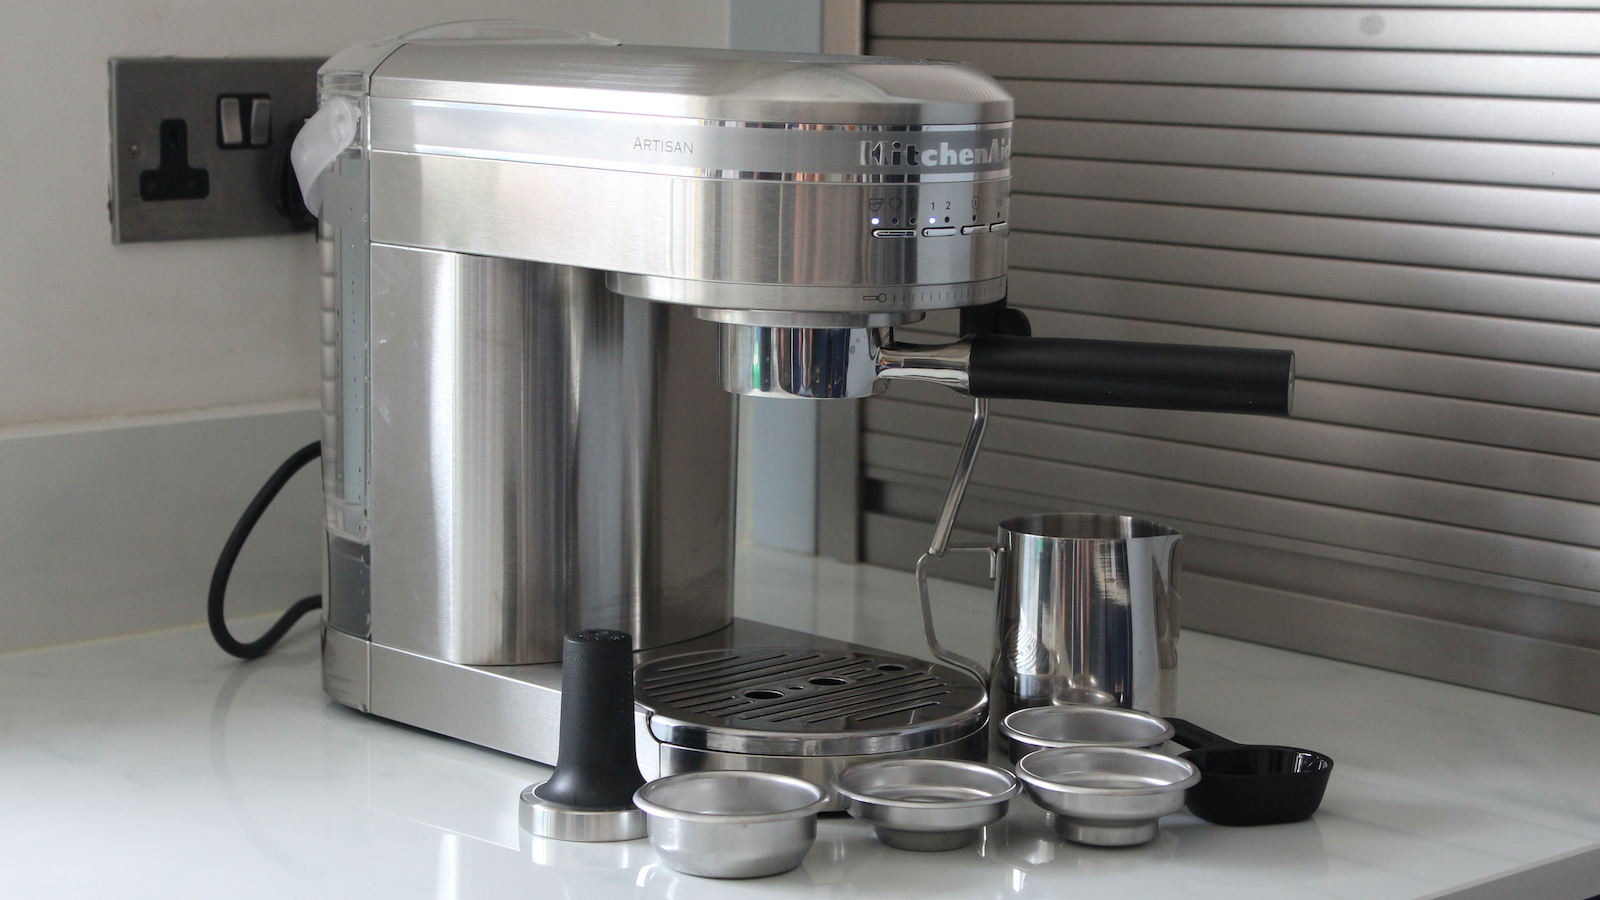  KitchenAid Artisan - Semi-automation for ease of use